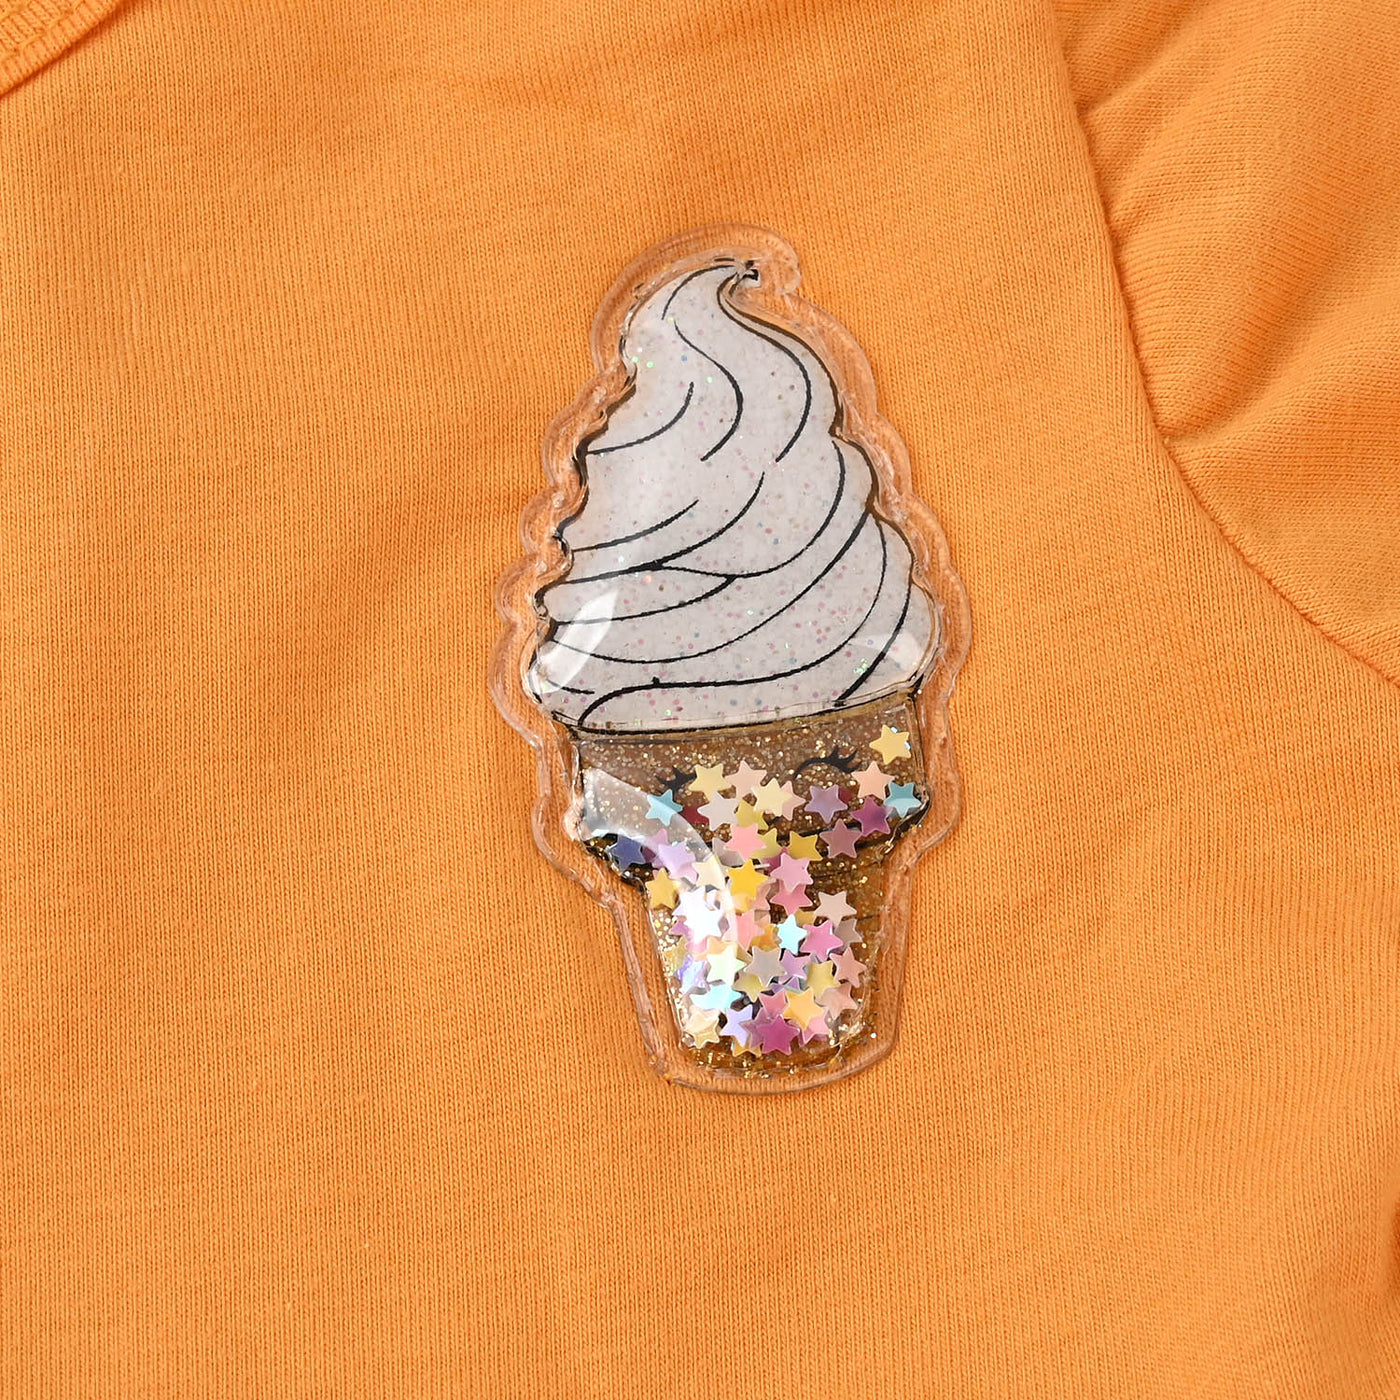 Infant Girls Cotton Jersey 2 Piece Set Ice Cream-White/Citrus